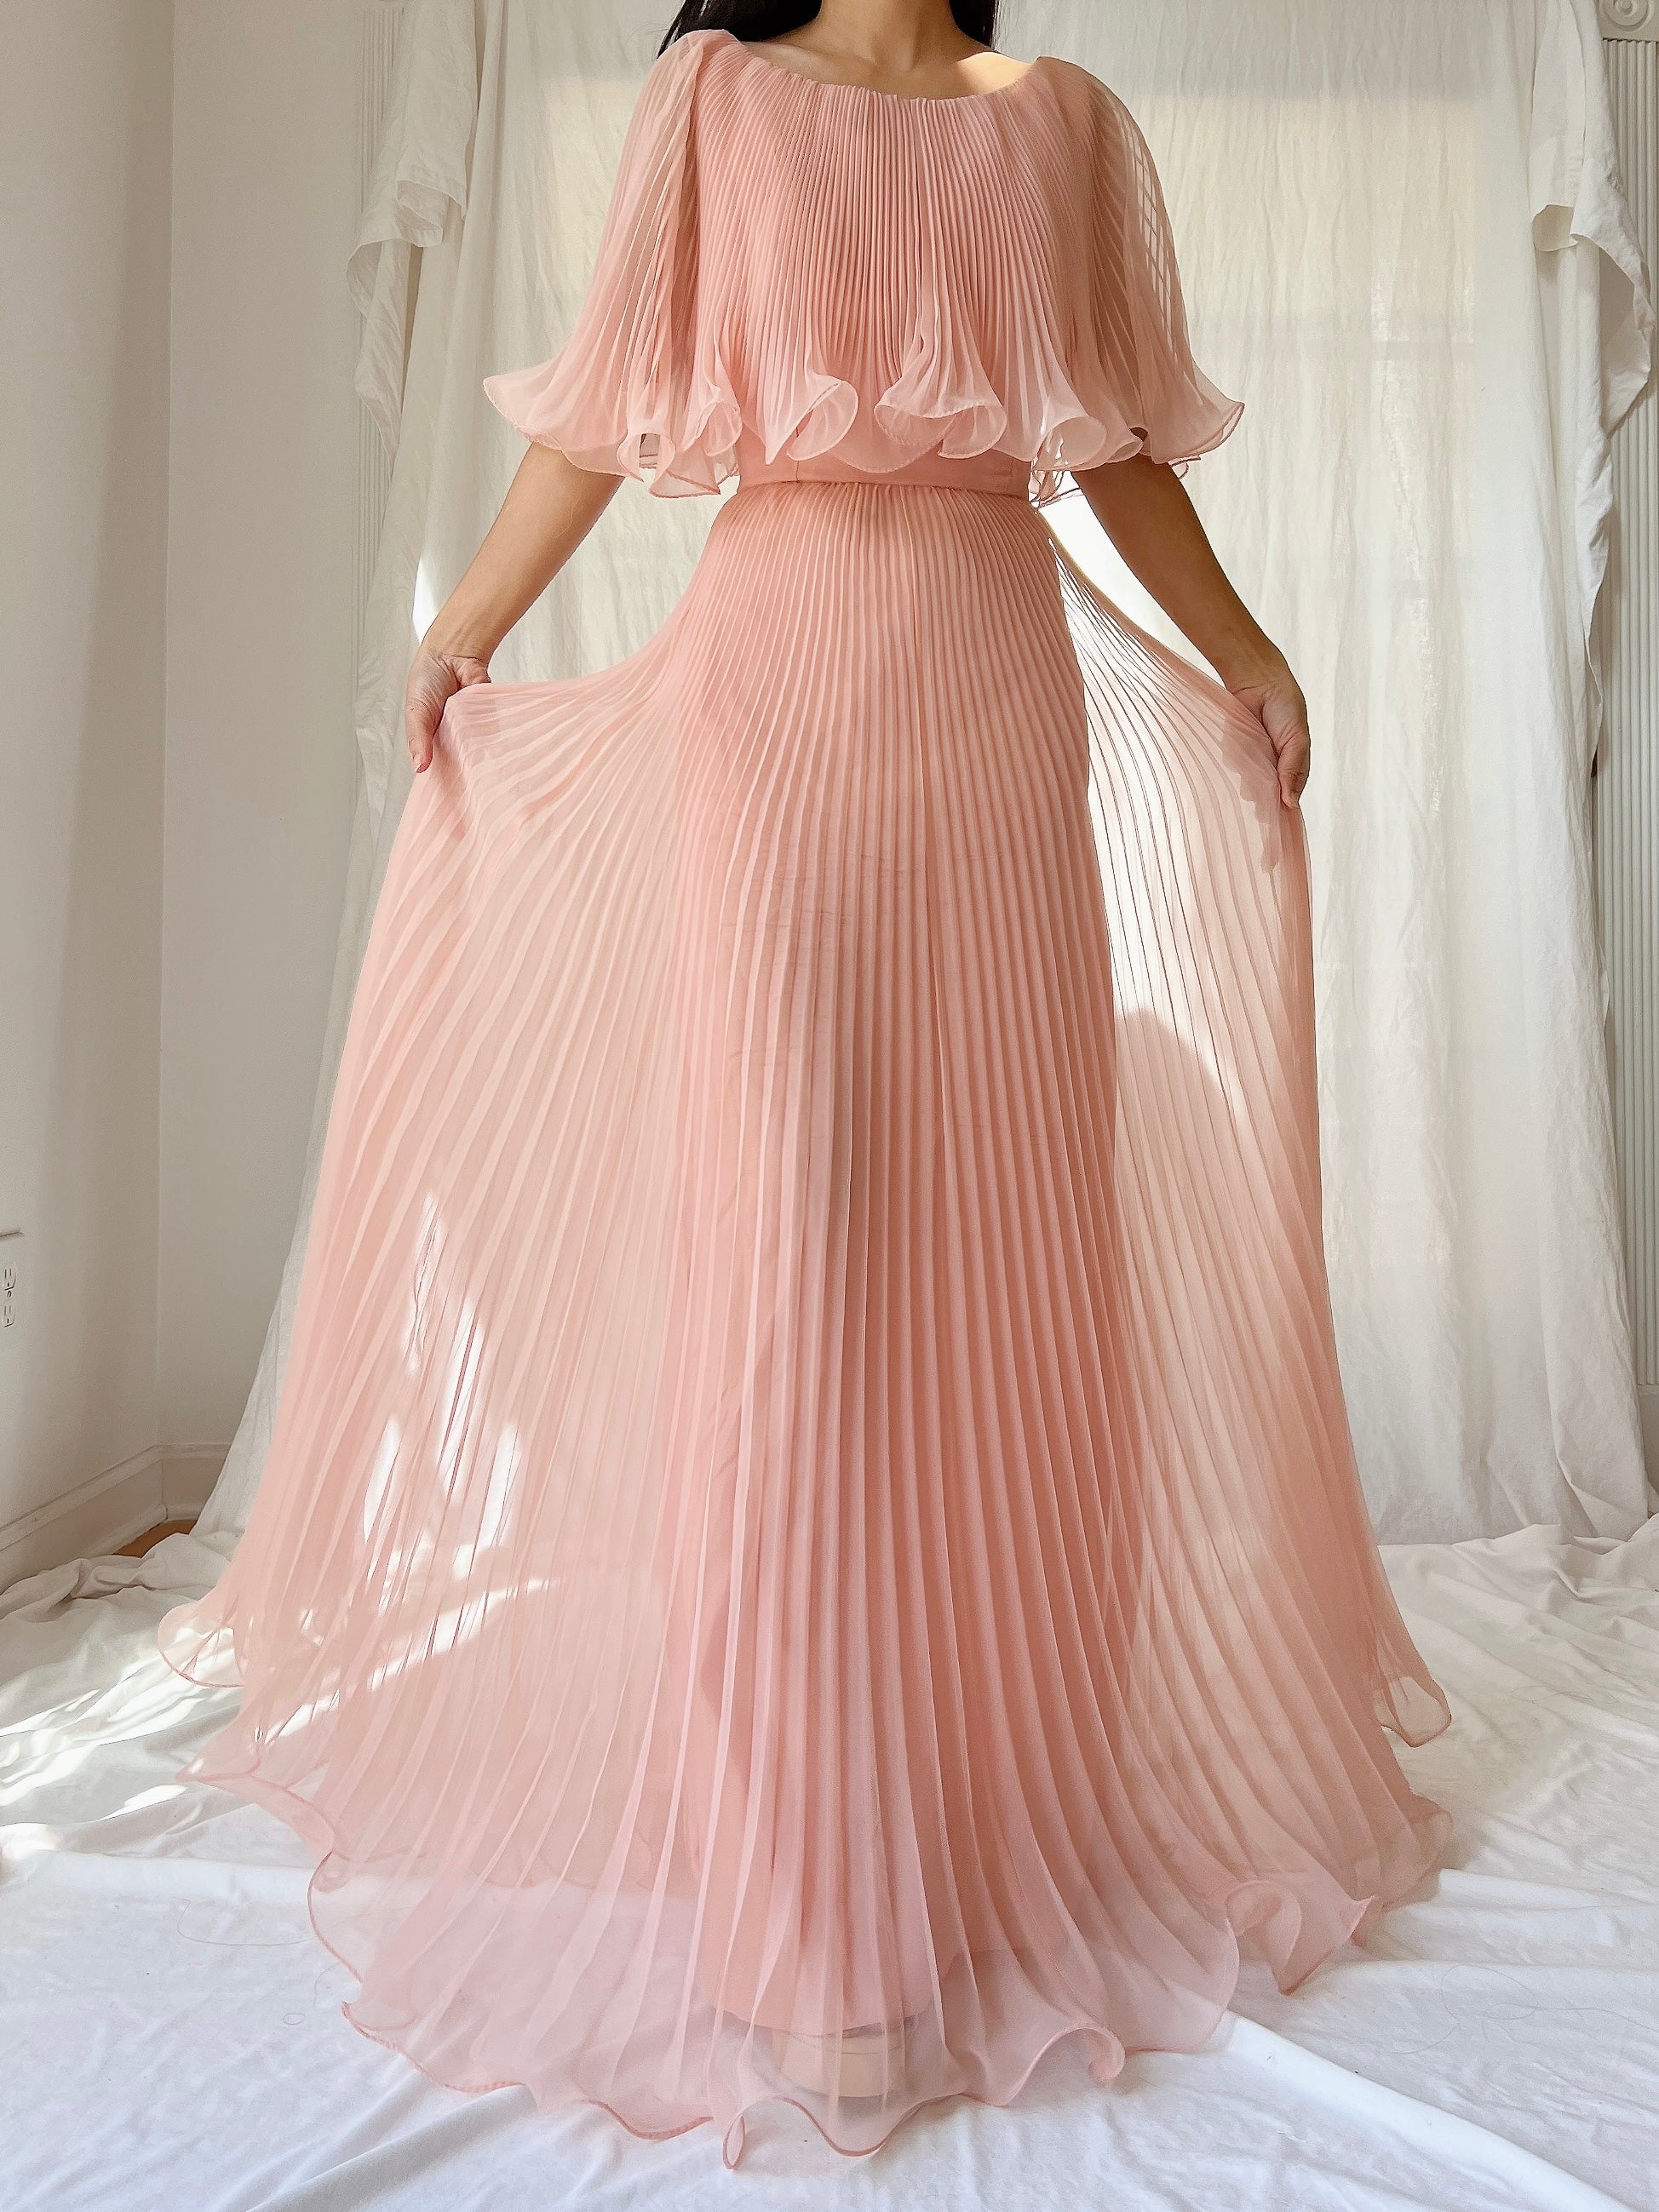 Vintage Peachy Pink Chiffon Dress - S